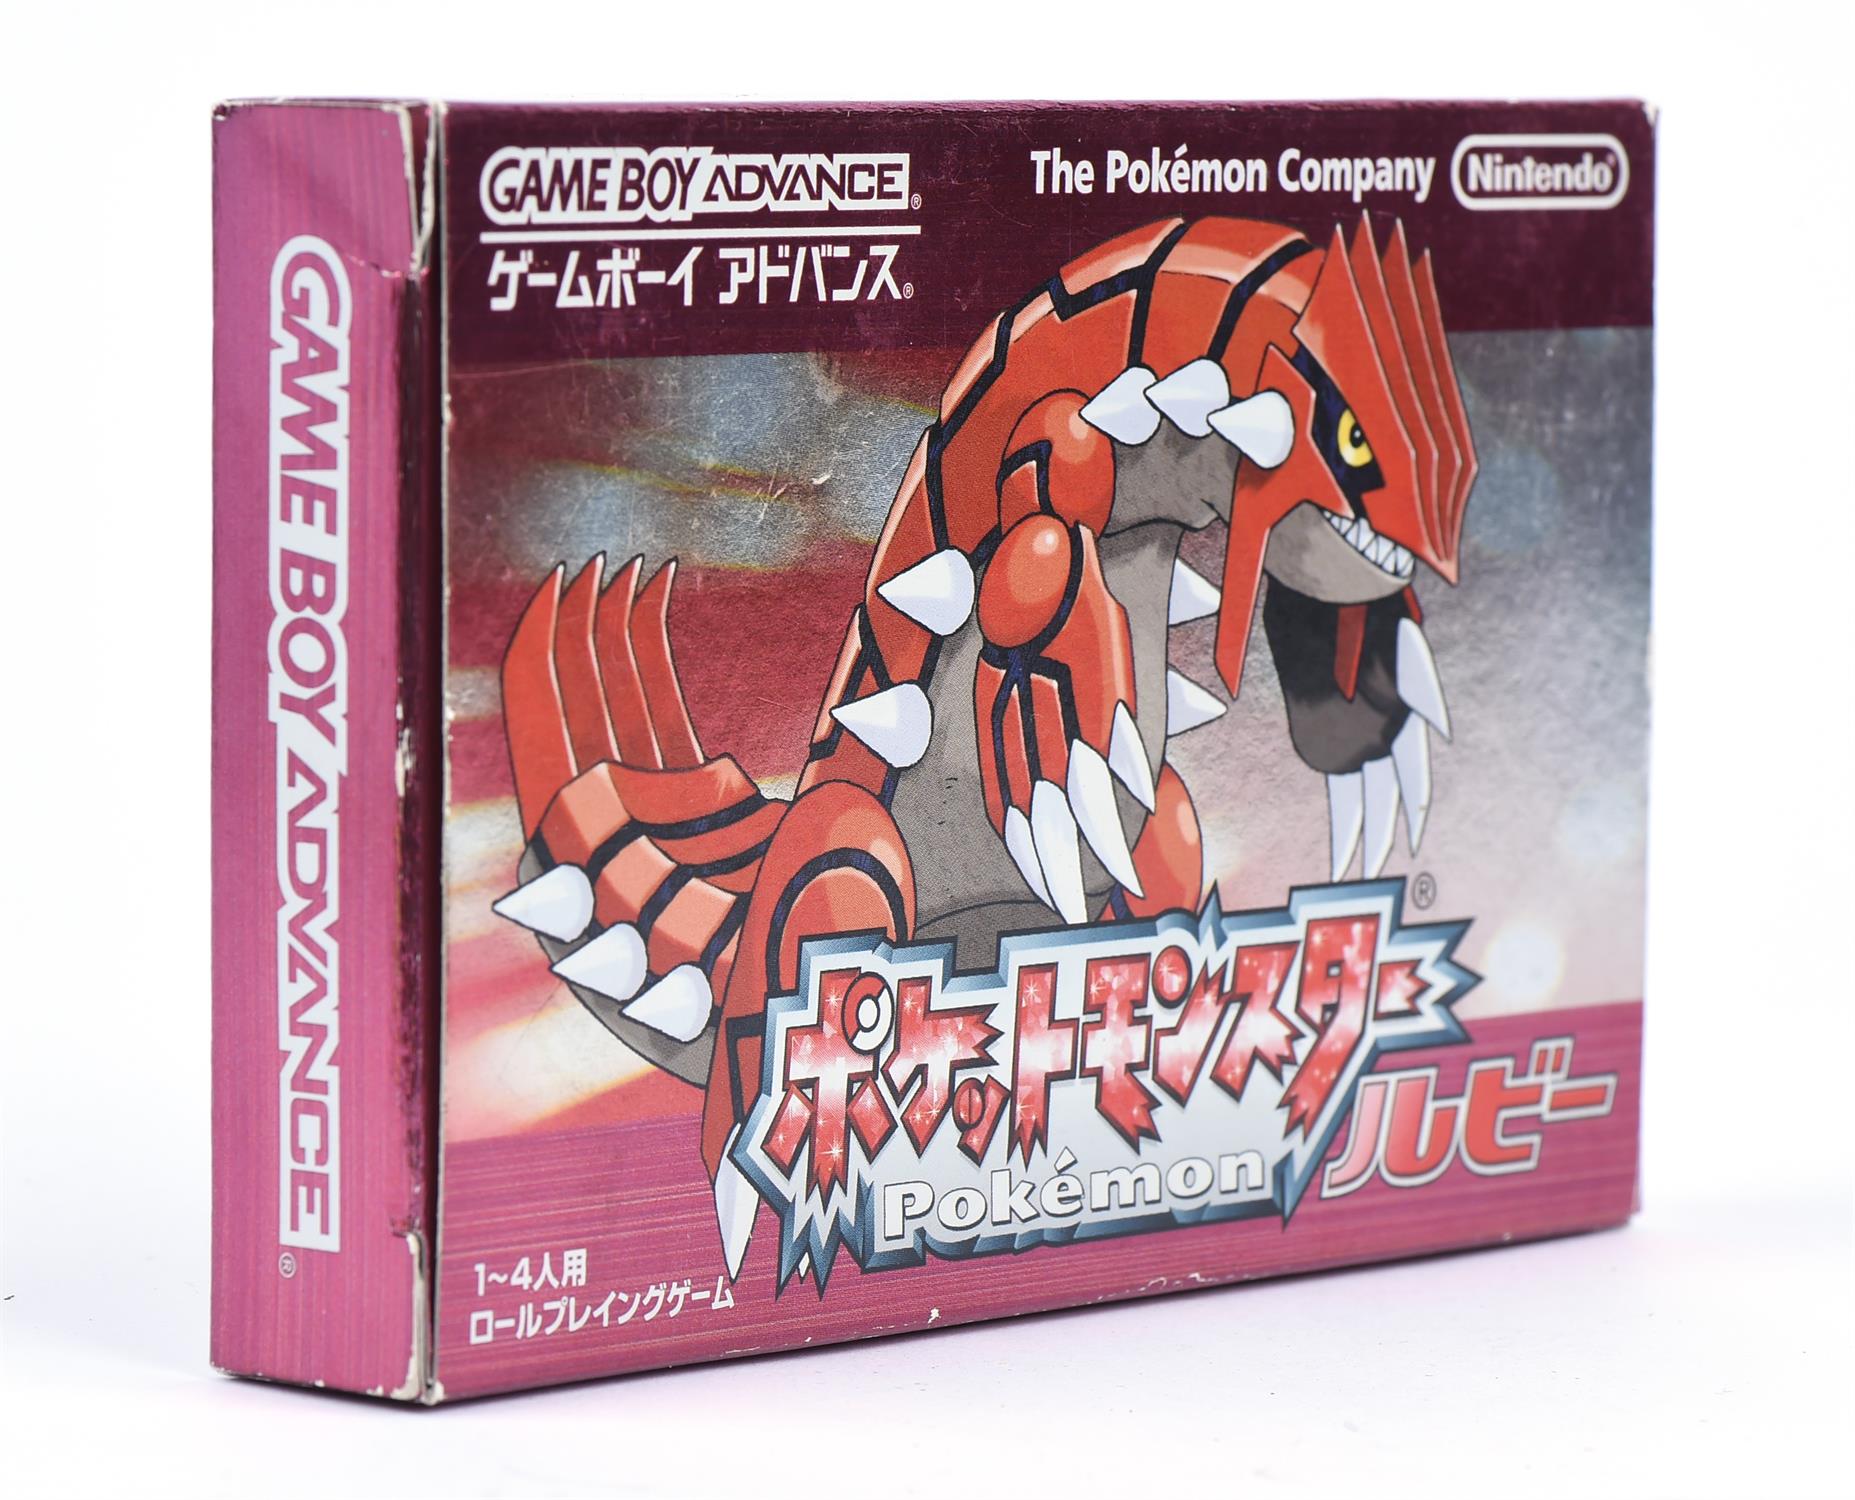 Pokémon Ruby Game Boy Advance (GBA) game [Box Only] - Image 2 of 5